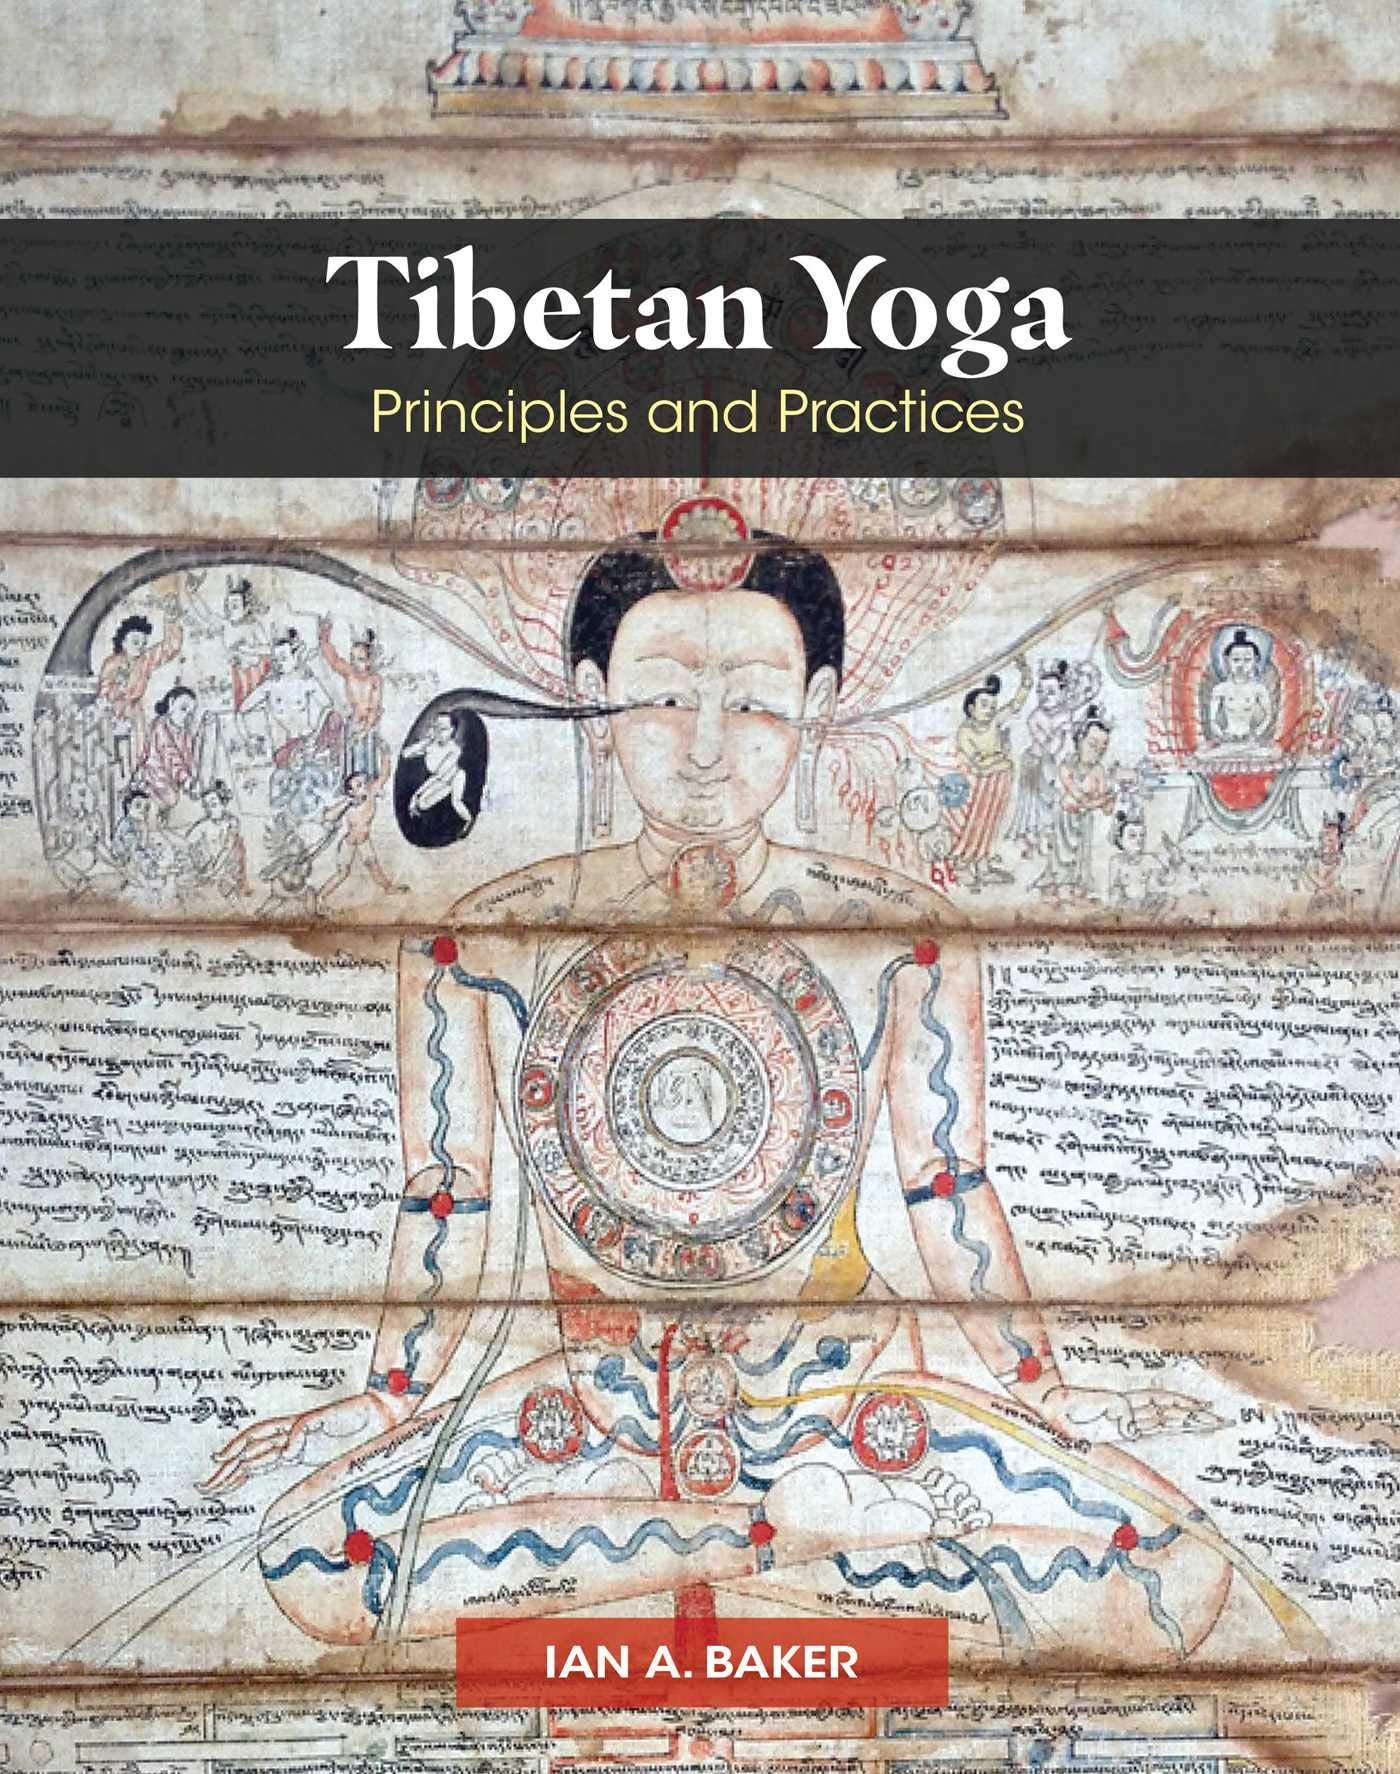 Ian A Baker 2000 - Tibetan Yoga Principles and Practices - 81puYvtfg3L.jpg